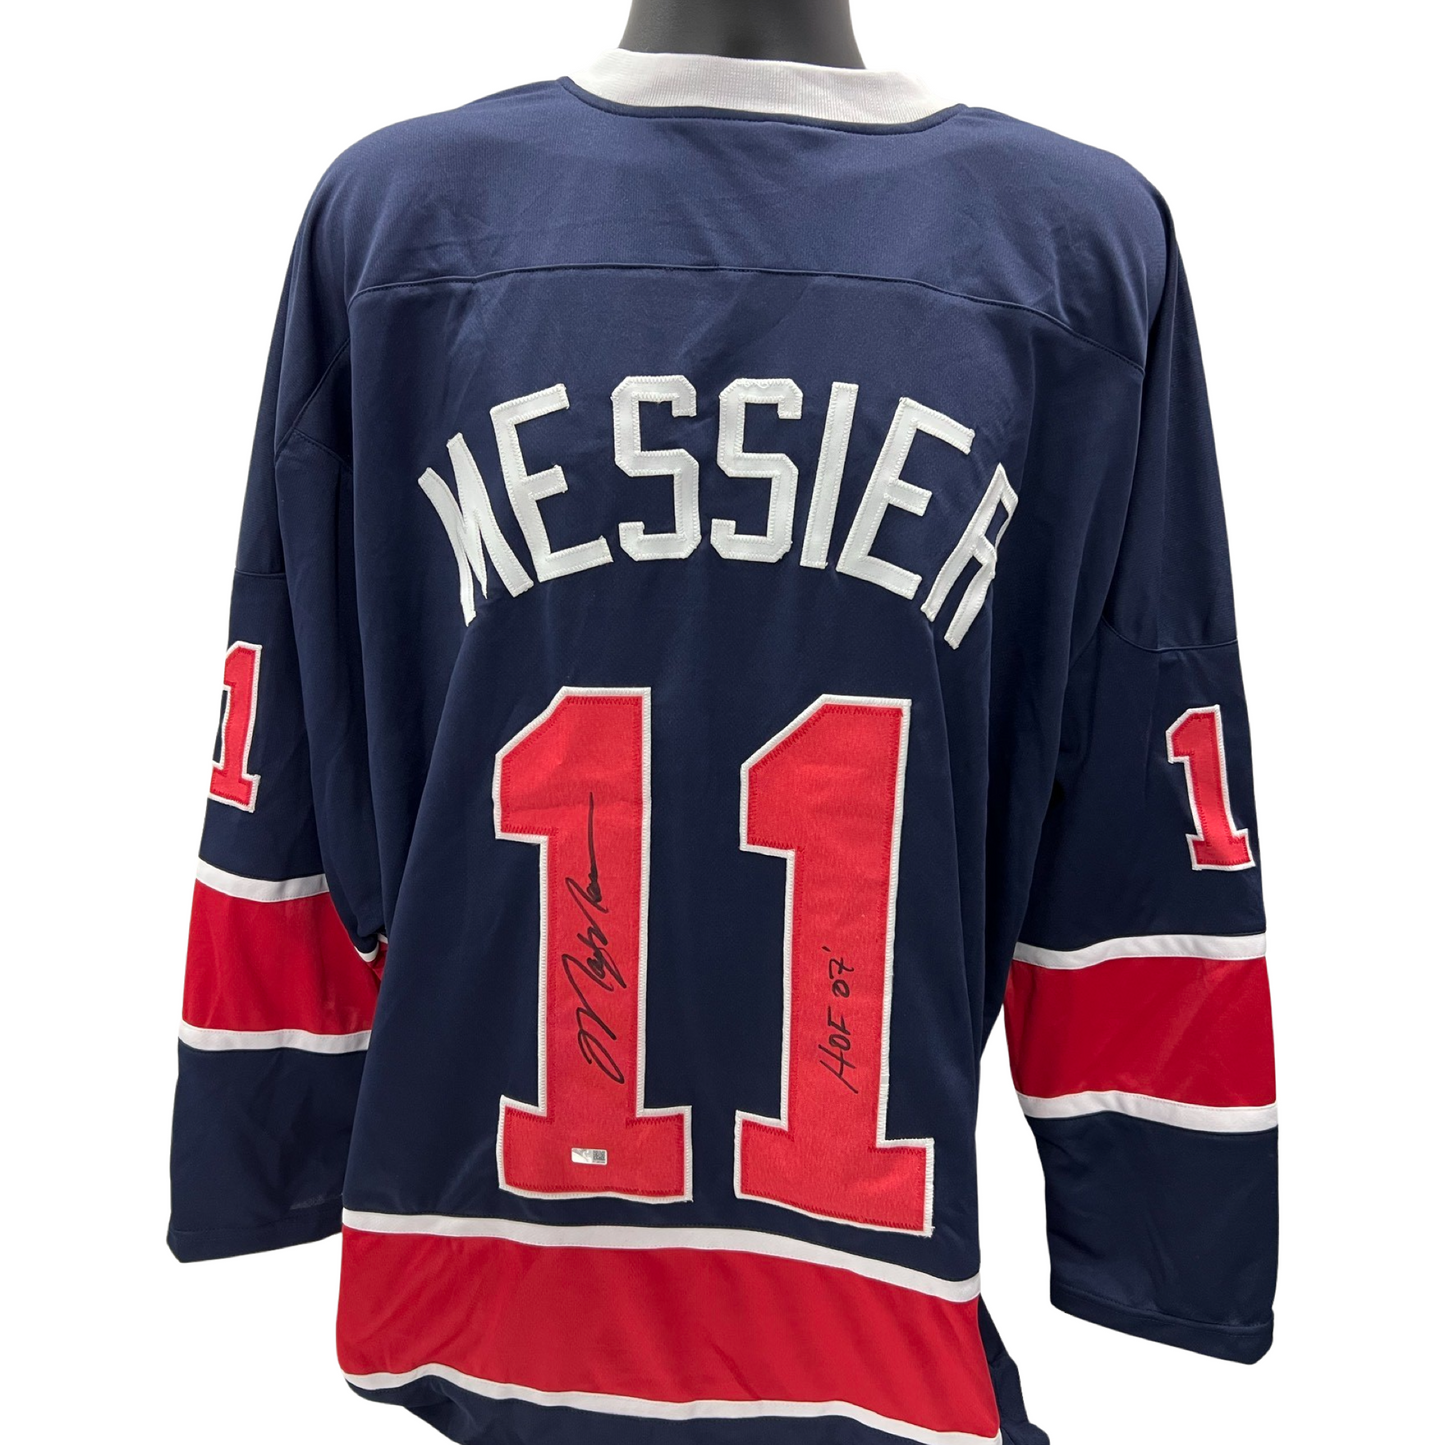 Mark Messier Autographed New York Rangers Navy/Red Number Jersey “HOF 07” Inscription Steiner CX